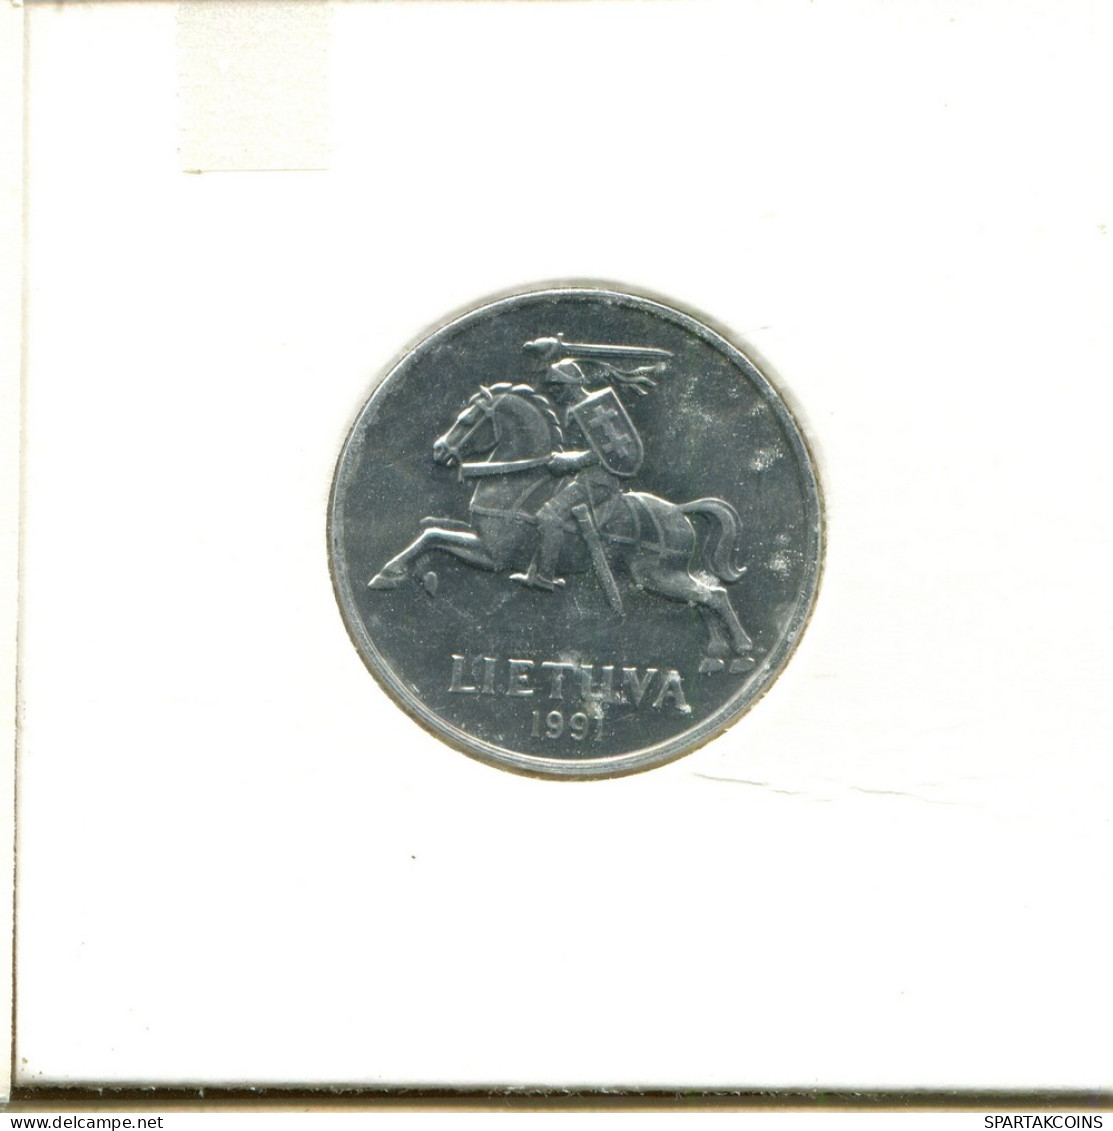 2 CENTAI 1991 LITHUANIA Coin #AS696.U - Lithuania